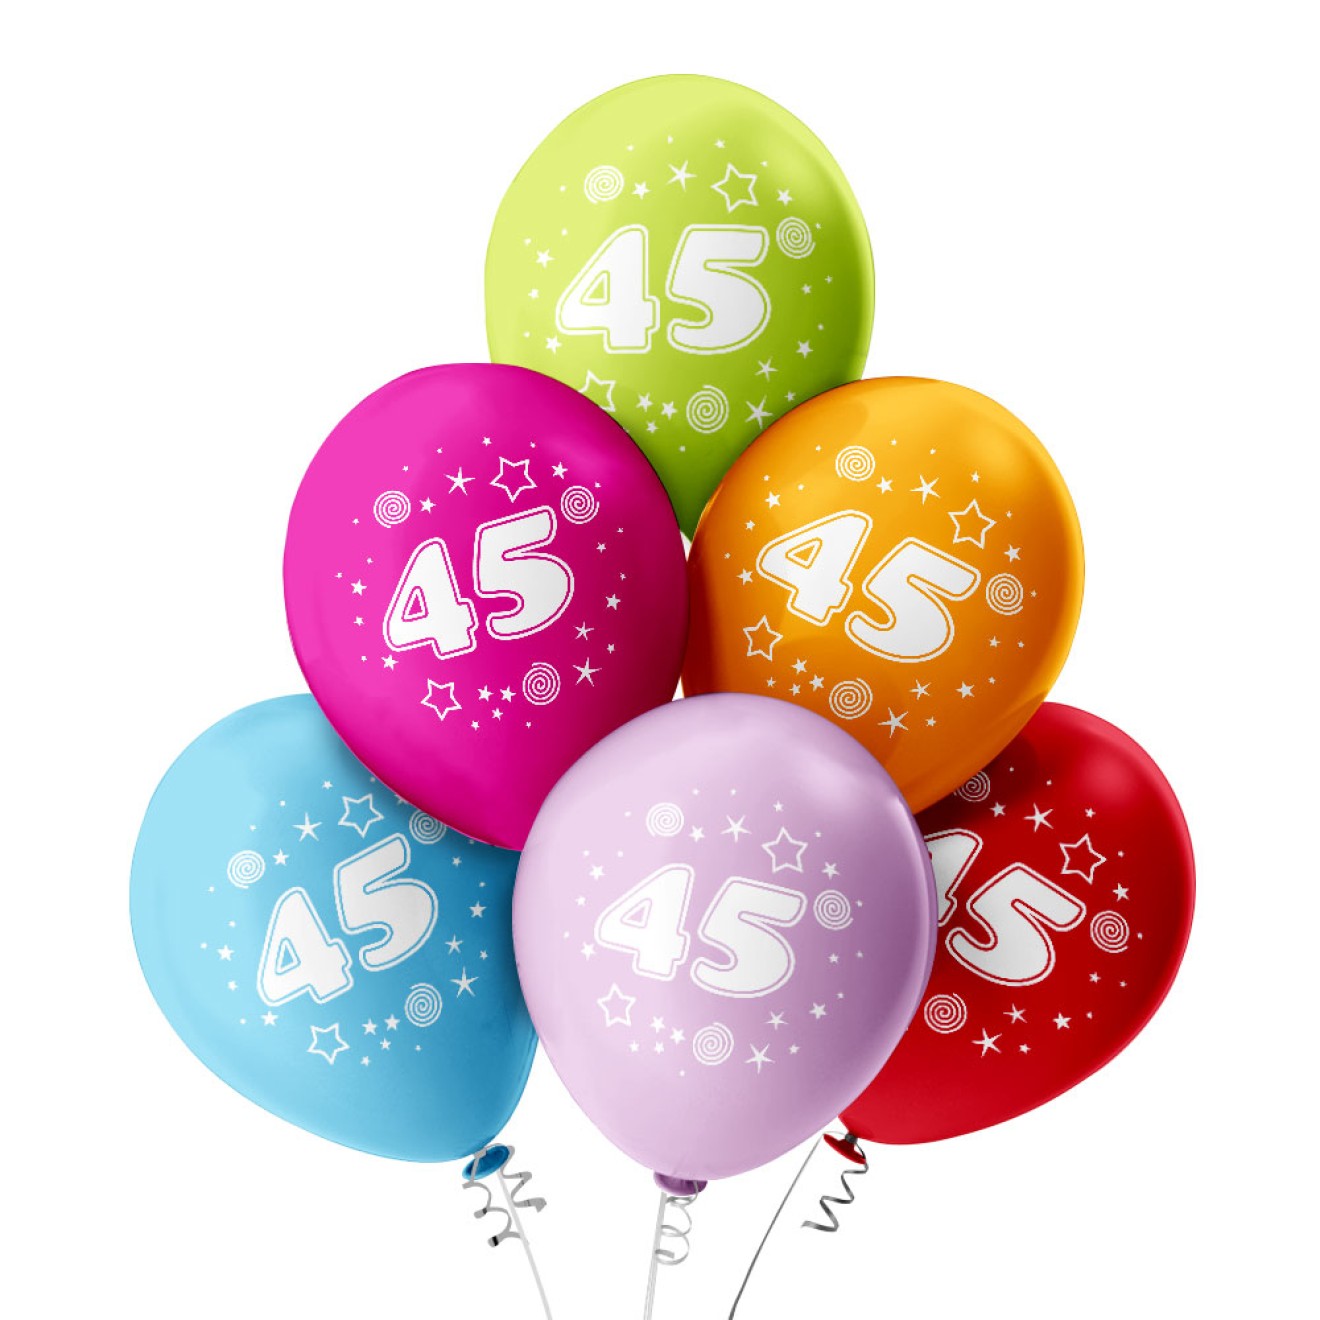 5 Alles Gute Zum Geburtstag Dinosaurier Luftballons Latex Nummer Bedruckt Alter